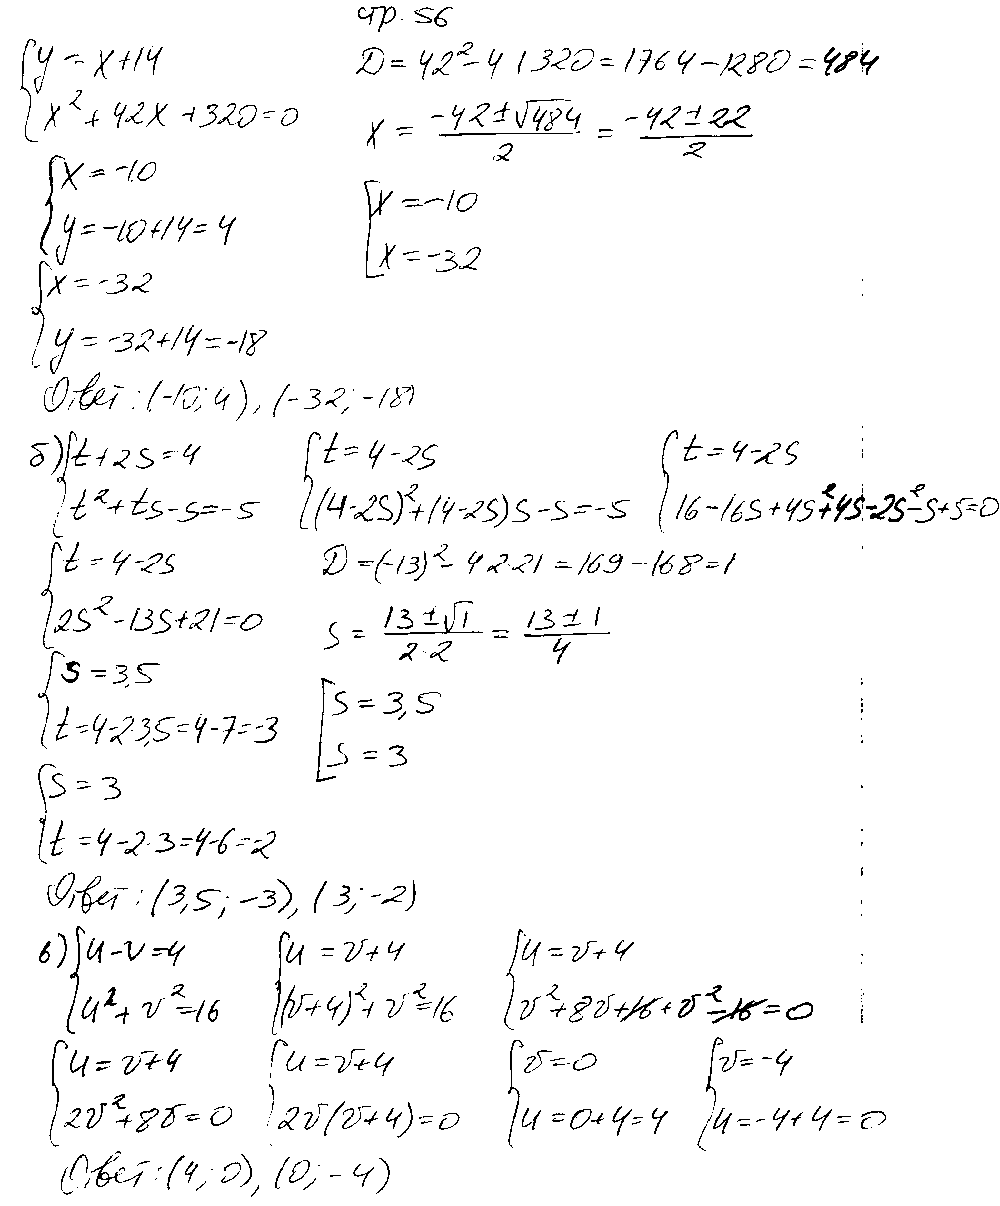 ГДЗ Алгебра 9 класс - стр. 56